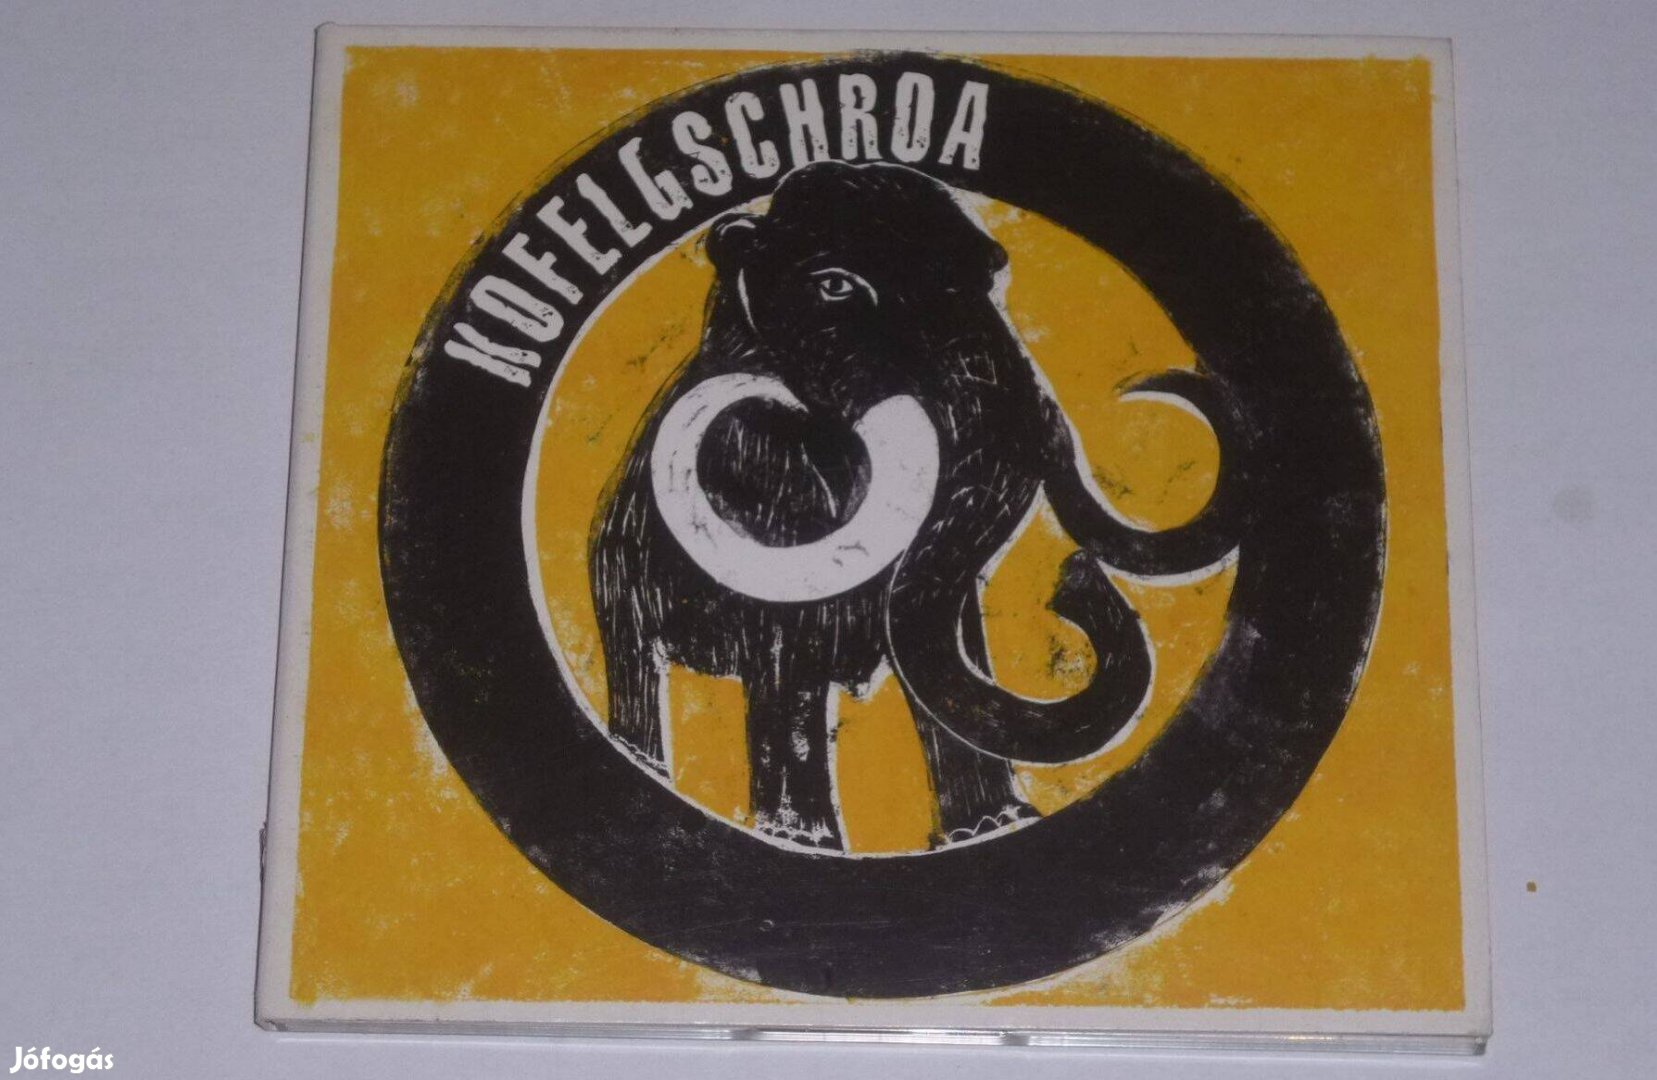 Kofelgschroa - Kofelgschroa CD